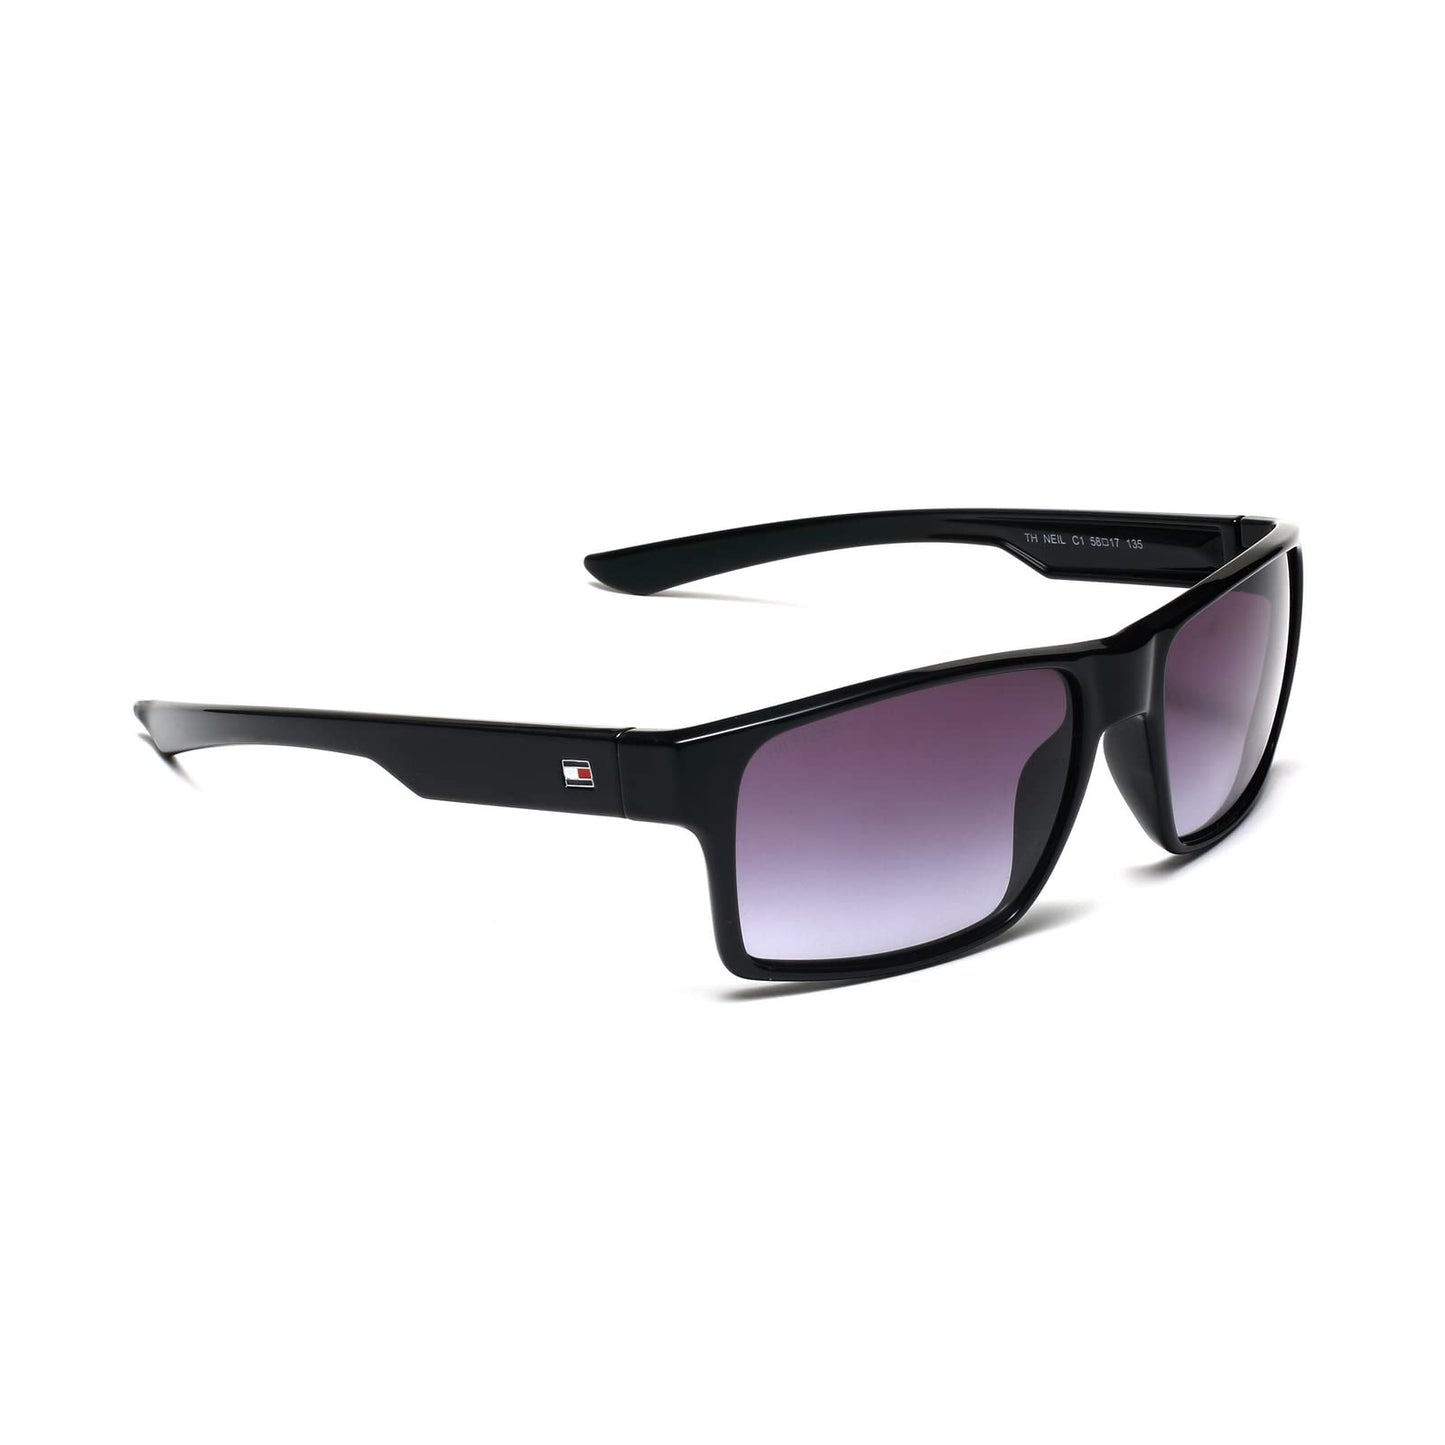 Tommy Hilfiger Men's Grey Sunglasses